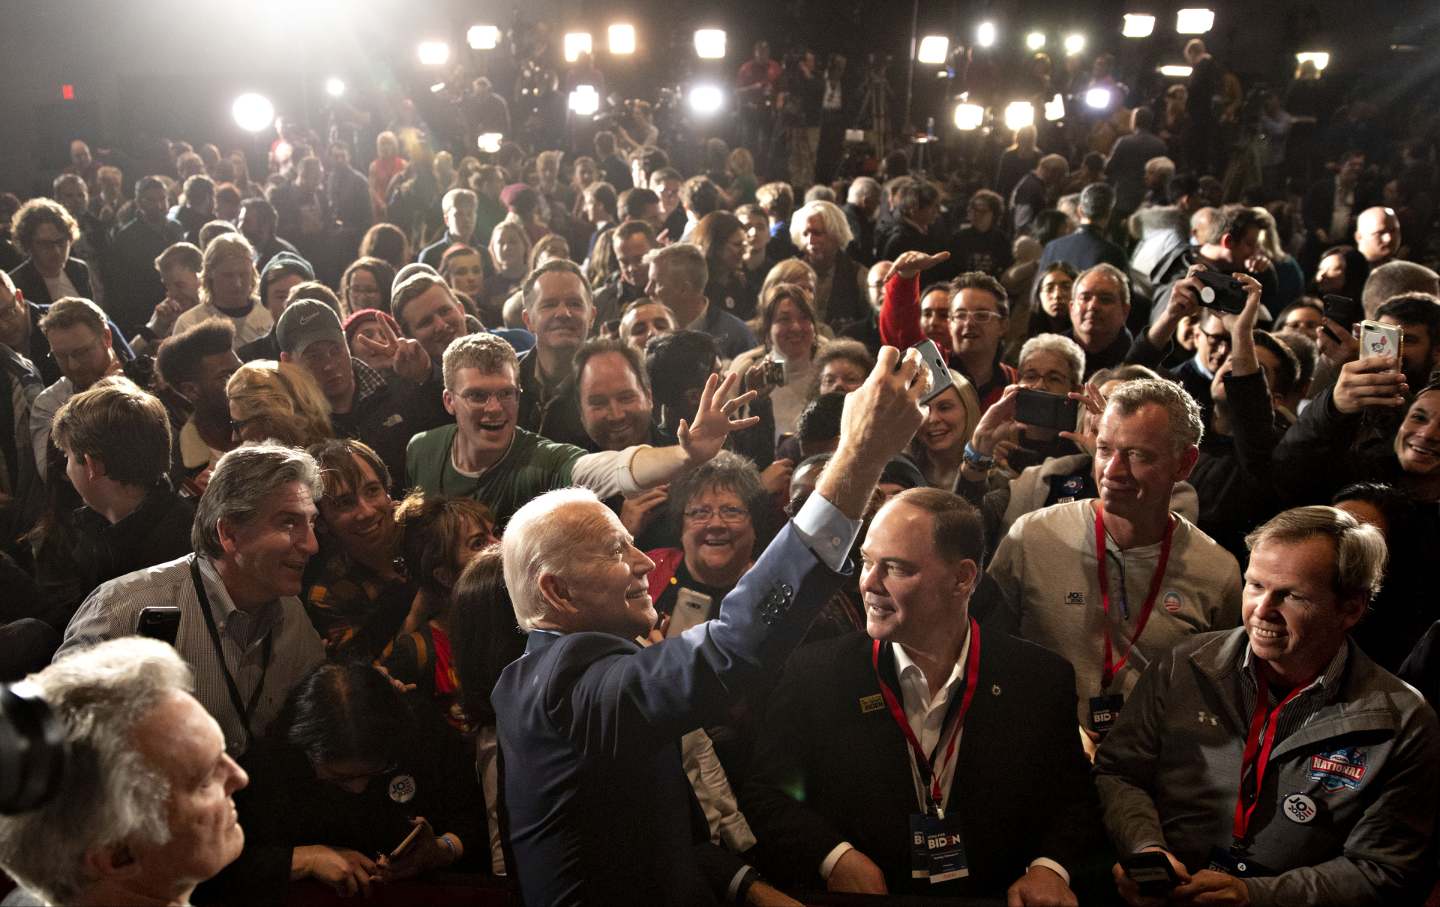 Joe Biden during a caucus night watch party in Des Moines, Iowa, U.S. on Monday, Feb. 3, 2020.